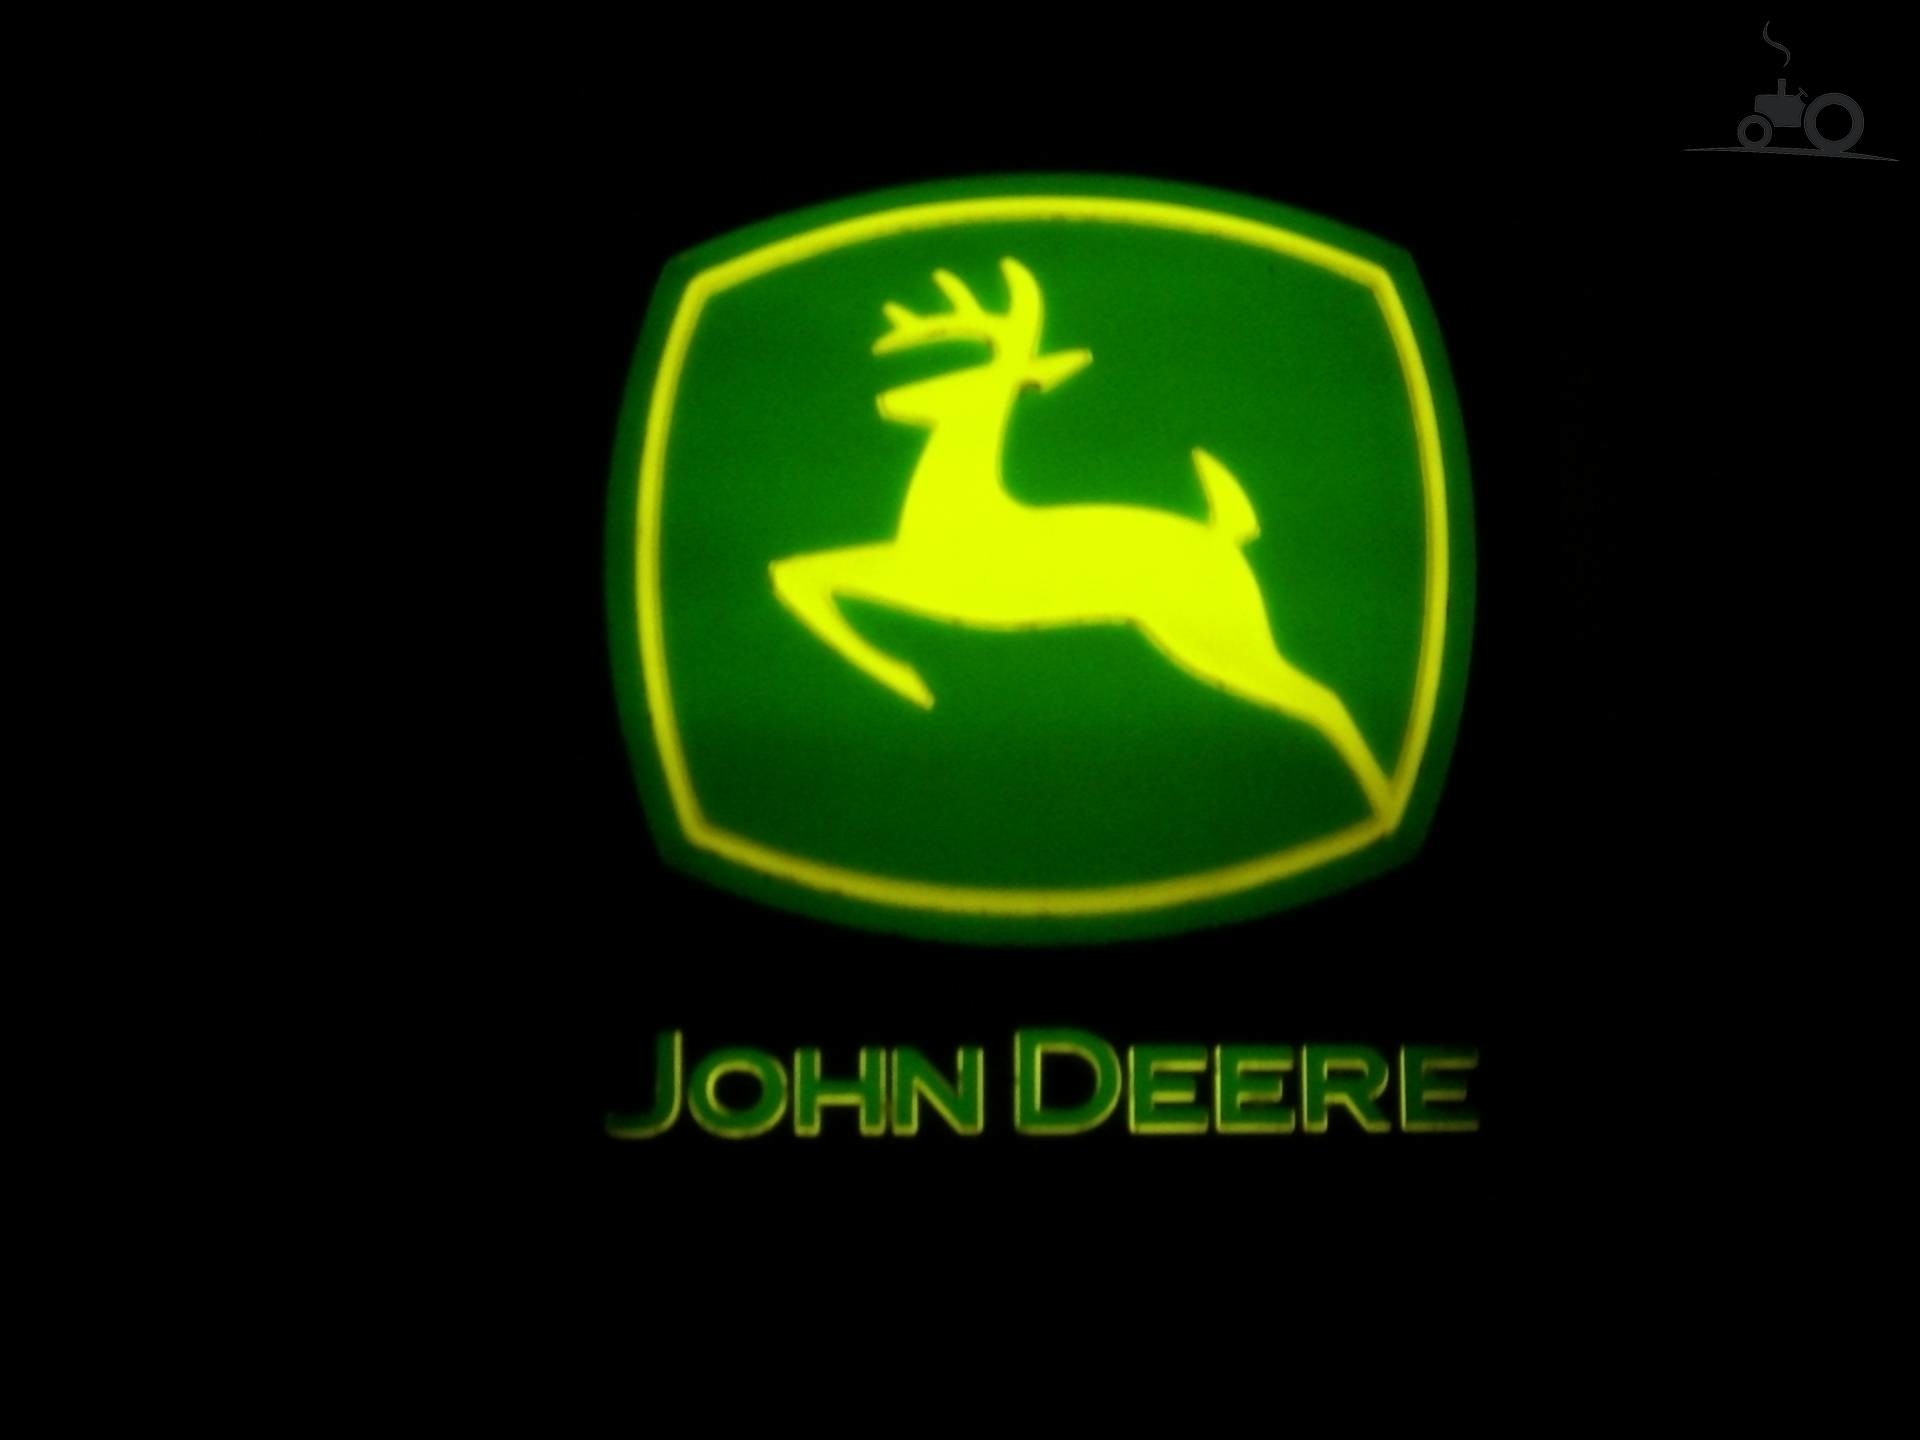 papier peint logo john deere,vert,jaune,signalisation,police de caractère,signe